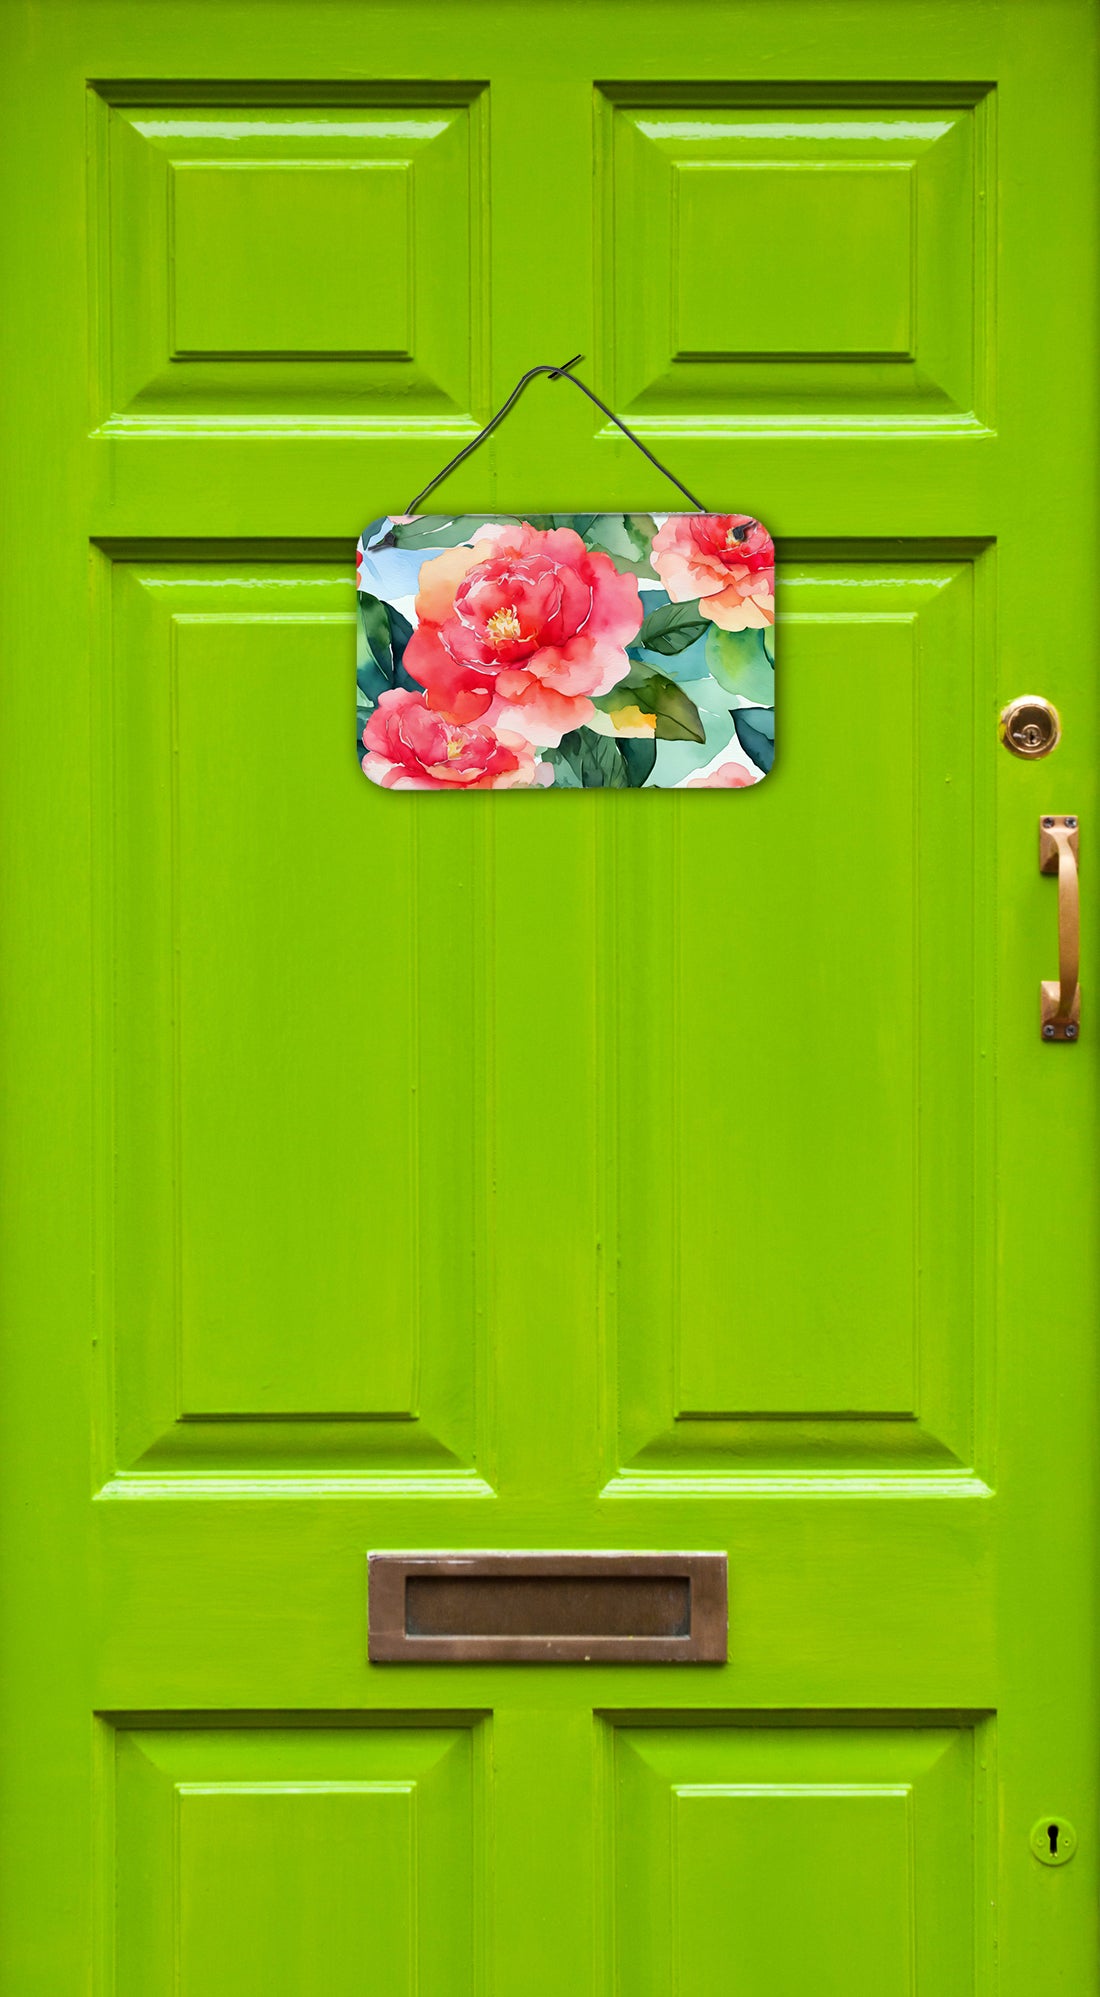 Buy this Alabama Camellia in Watercolor Wall or Door Hanging Prints